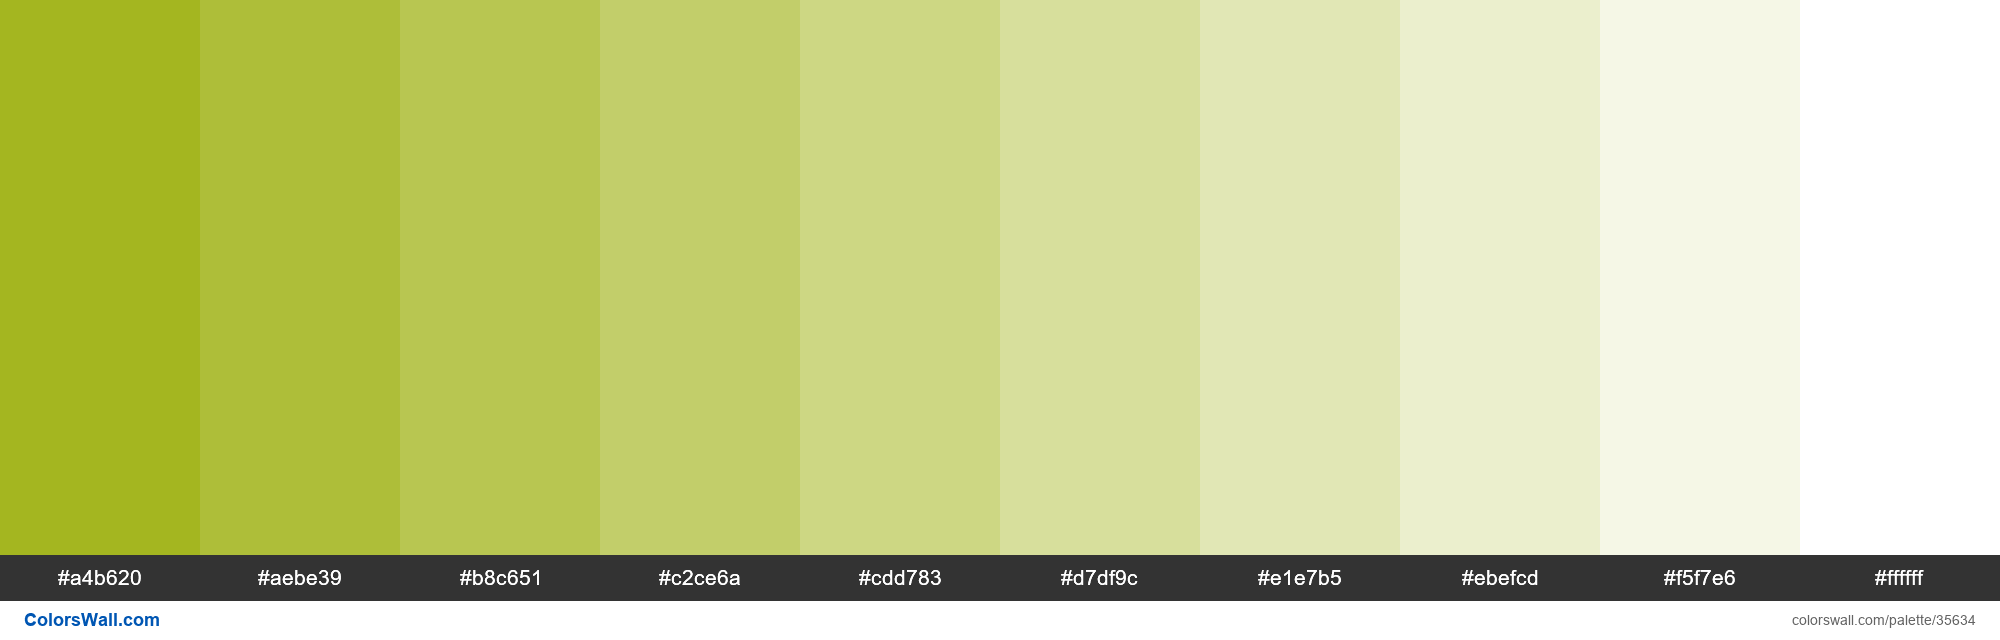 Tints XKCD Color puke green #9aae07 hex colors palette | ColorsWall